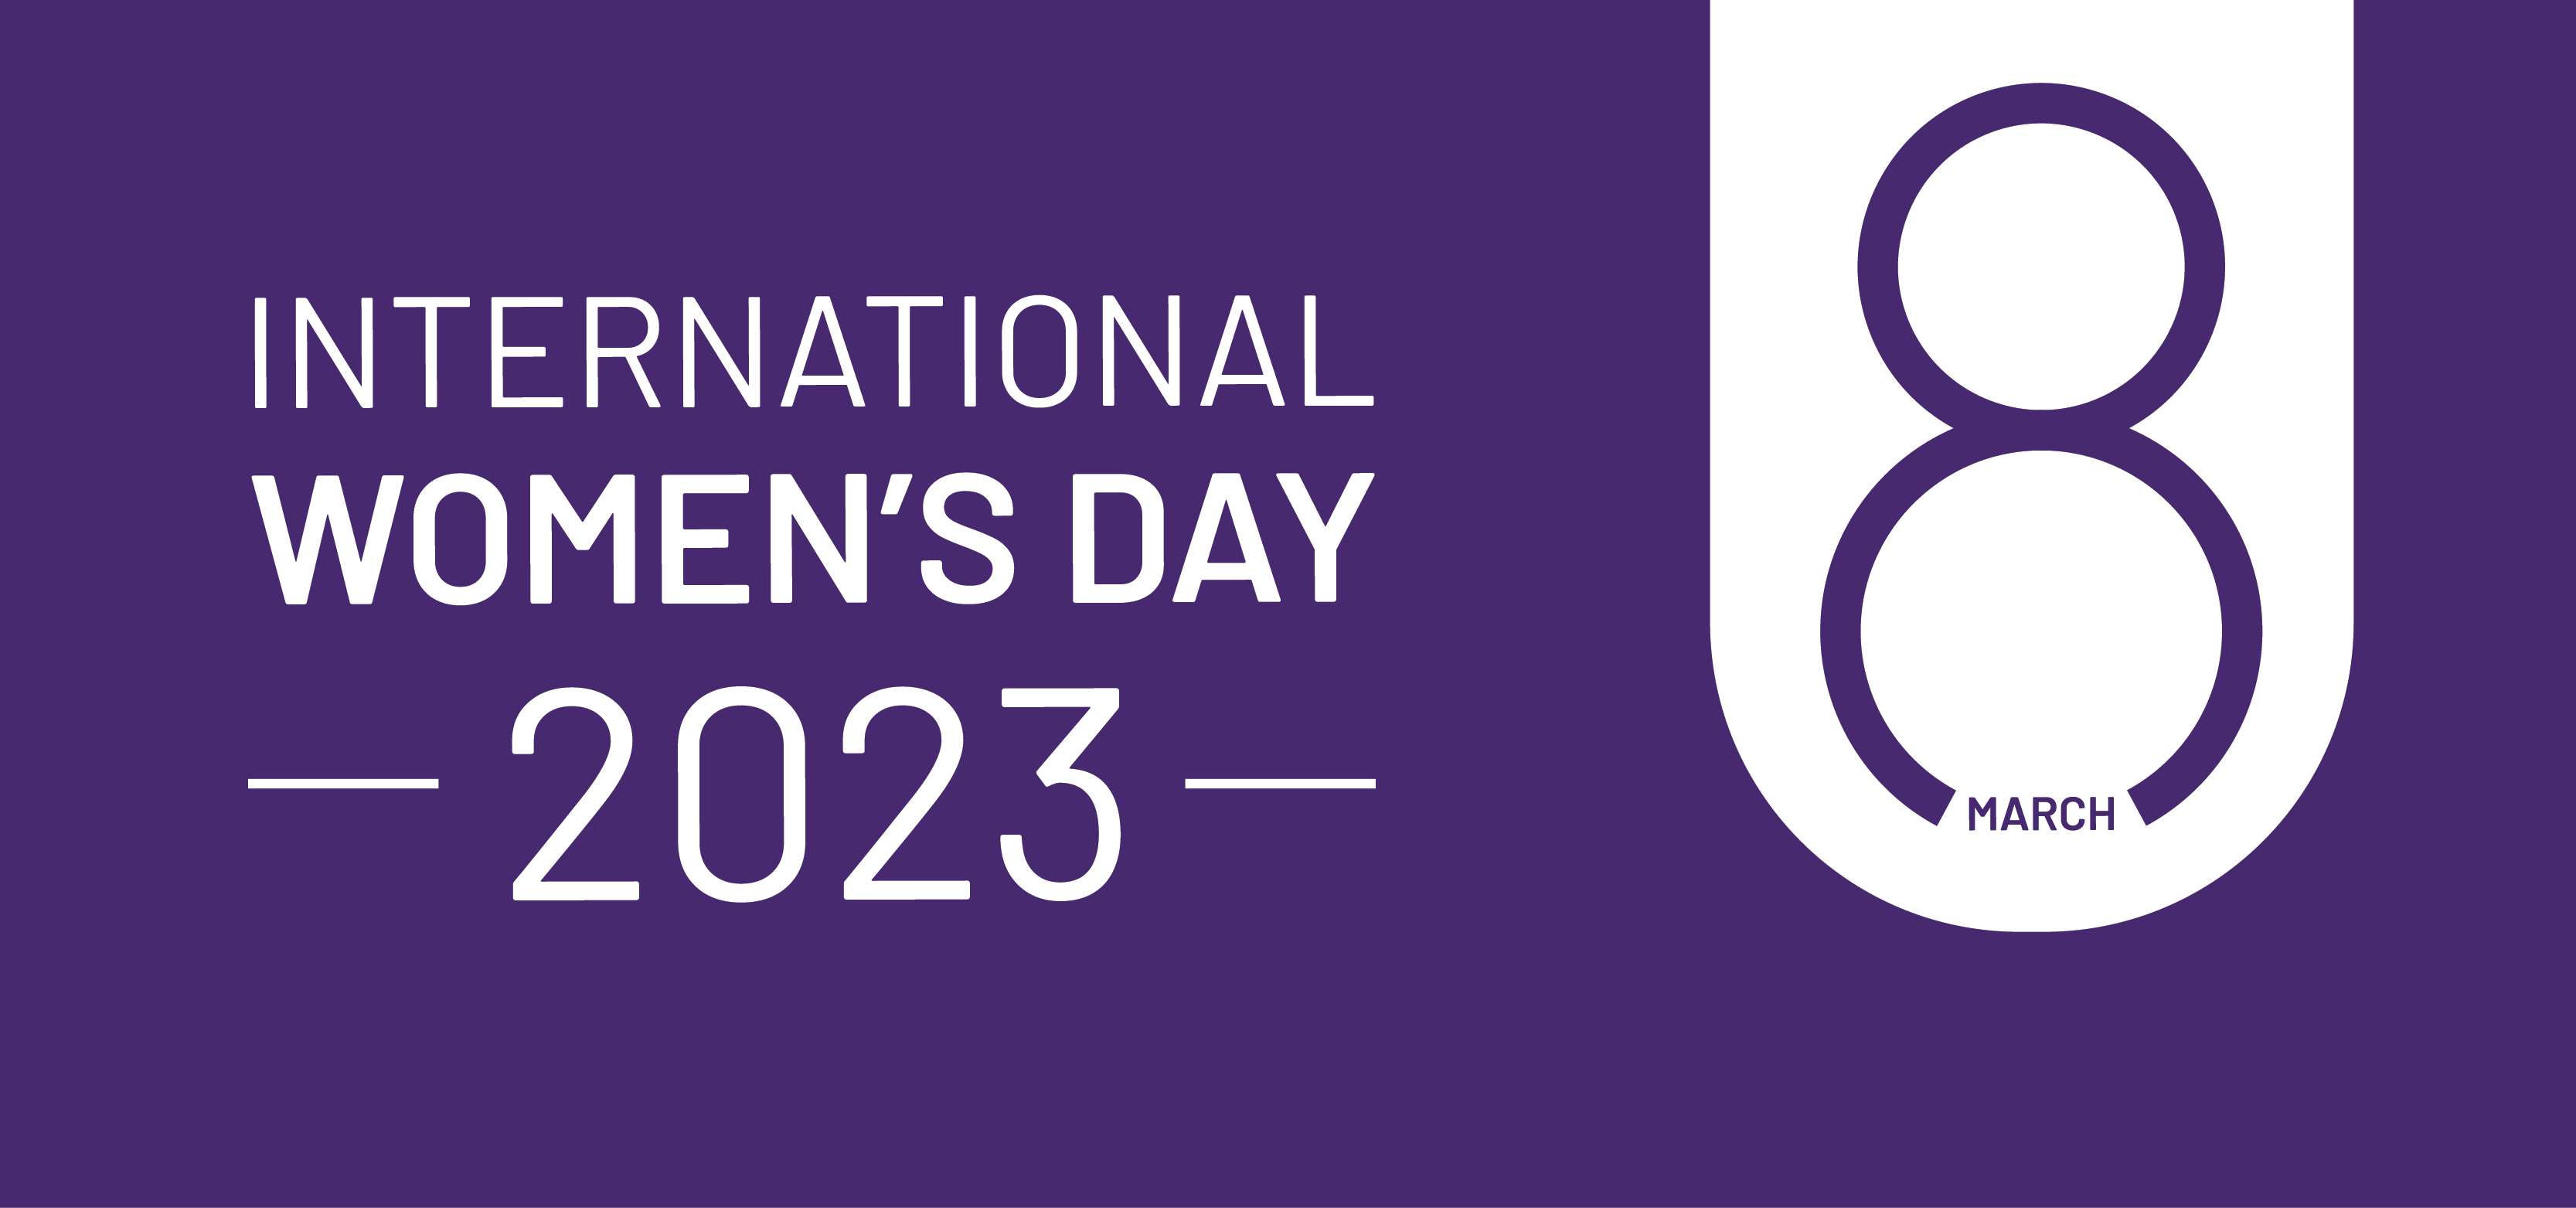 Celebrating International Women’s Day 2023